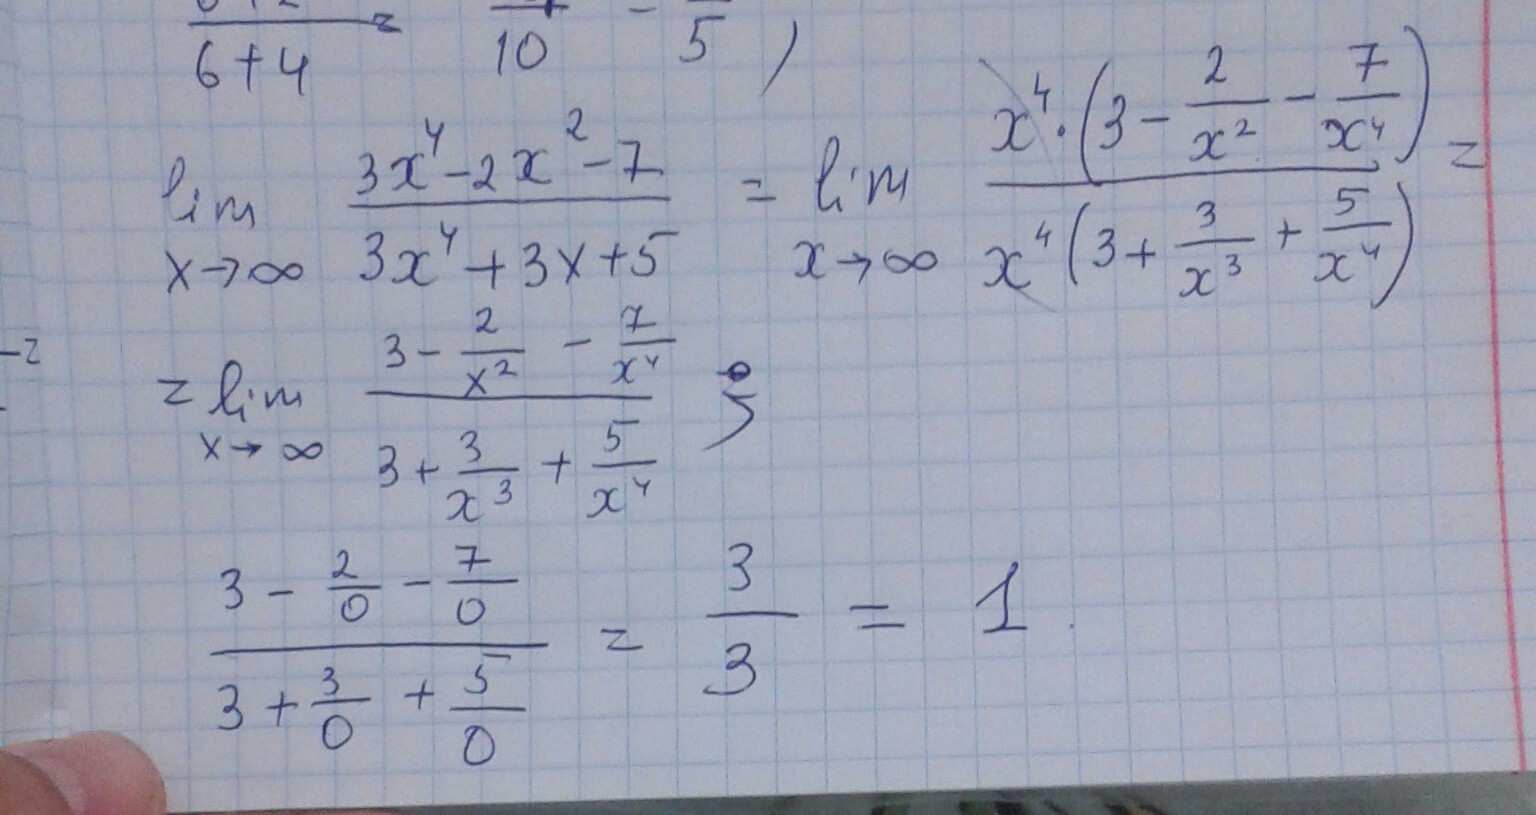 X2 4x a 5 10. Lim x стремится к бесконечности 2/x 2+3x. Lim x стремится к бесконечности x^2-4x+3/x+5. Lim x стремится к бесконечности (2x/2x-3)^3x. Lim x стремится к бесконечности 3+x-5x4.